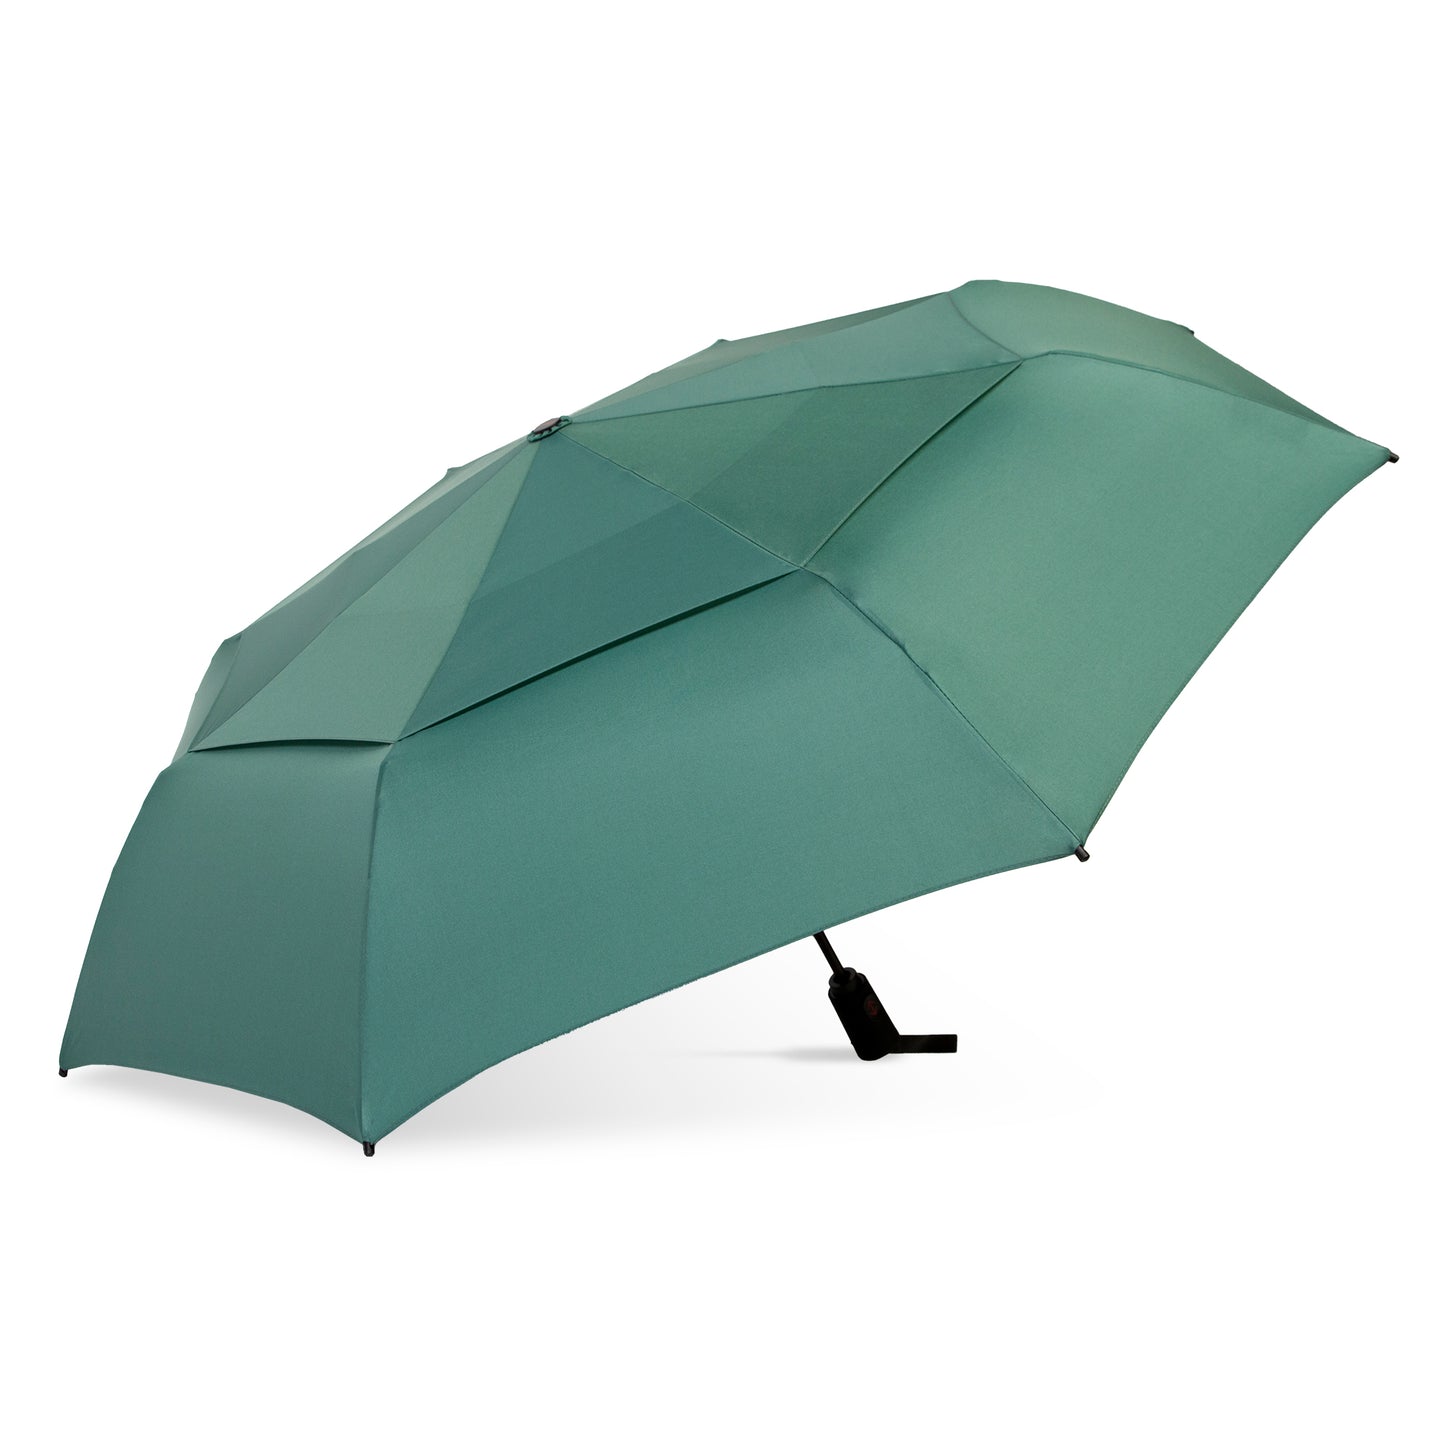 Vortex AOAC Compact Umbrella